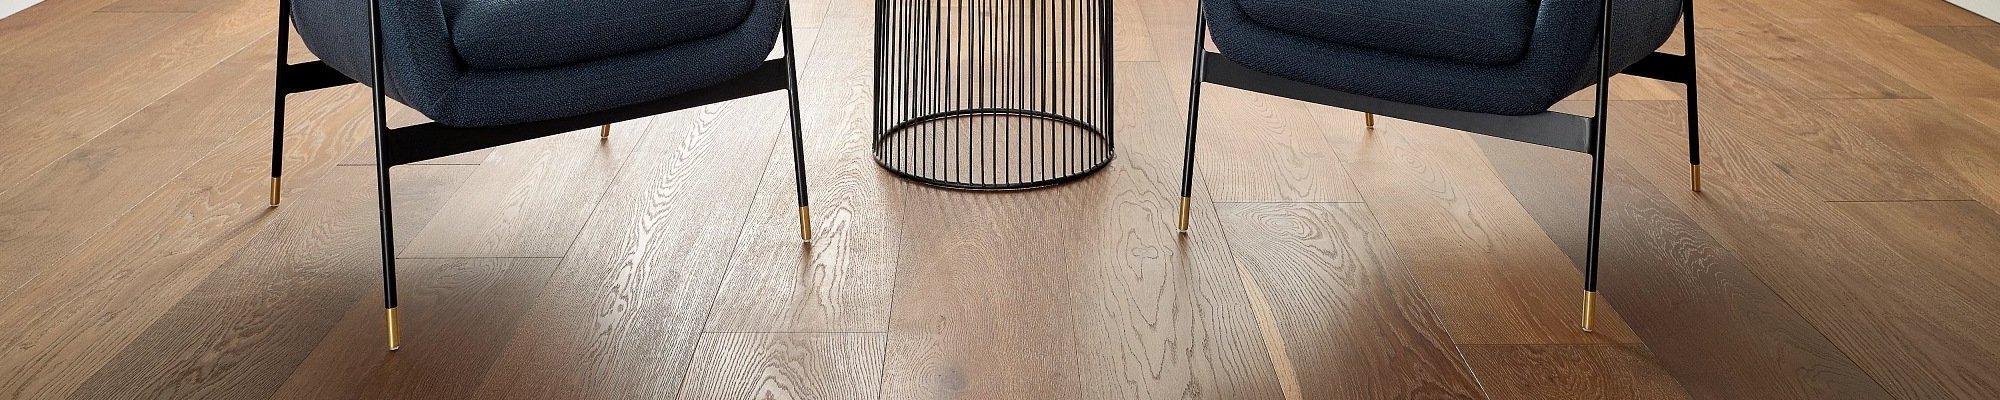 two arm chairs on wood floors - Abdinoors Carpet Craft Inc